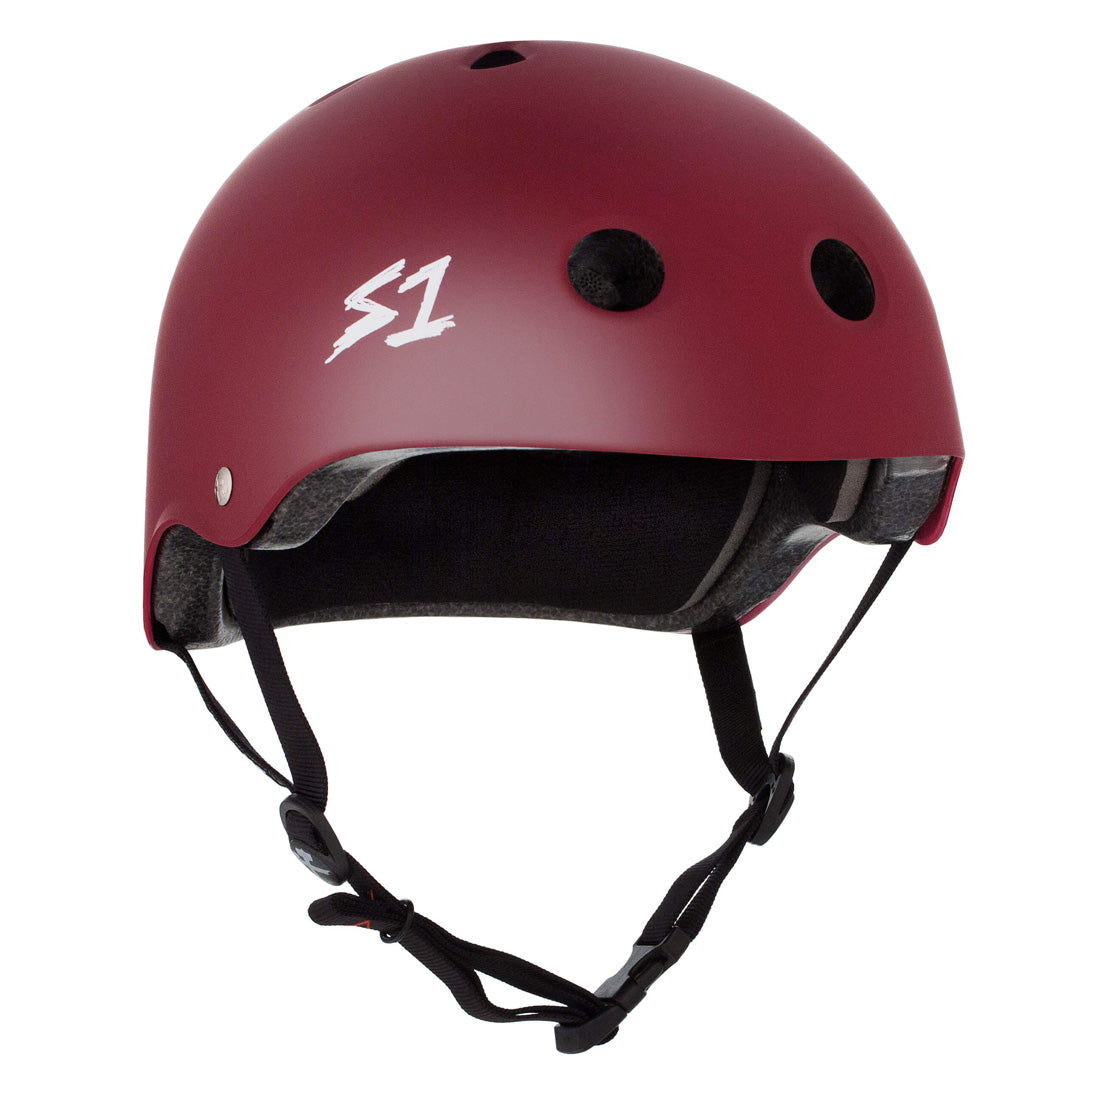 S-One Lifer Helmet - Maroon Matte Helmets